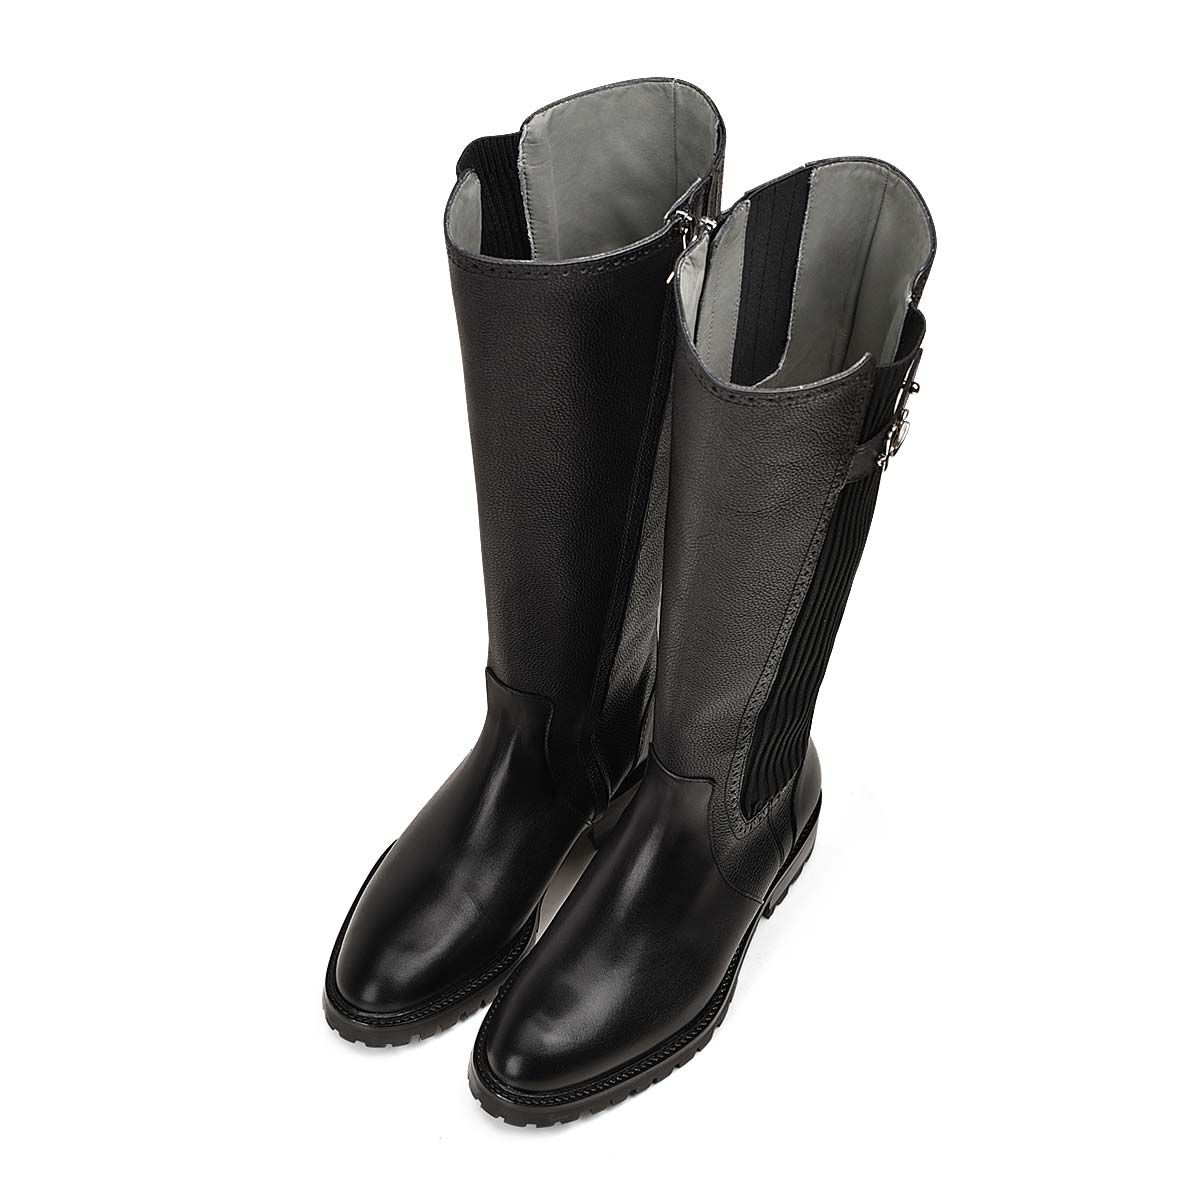 94TTSRS - Franco Cuadra black casual cowhide leather wellington boots for woman.-FRANCO CUADRA-Kuet-Cuadra-Boots